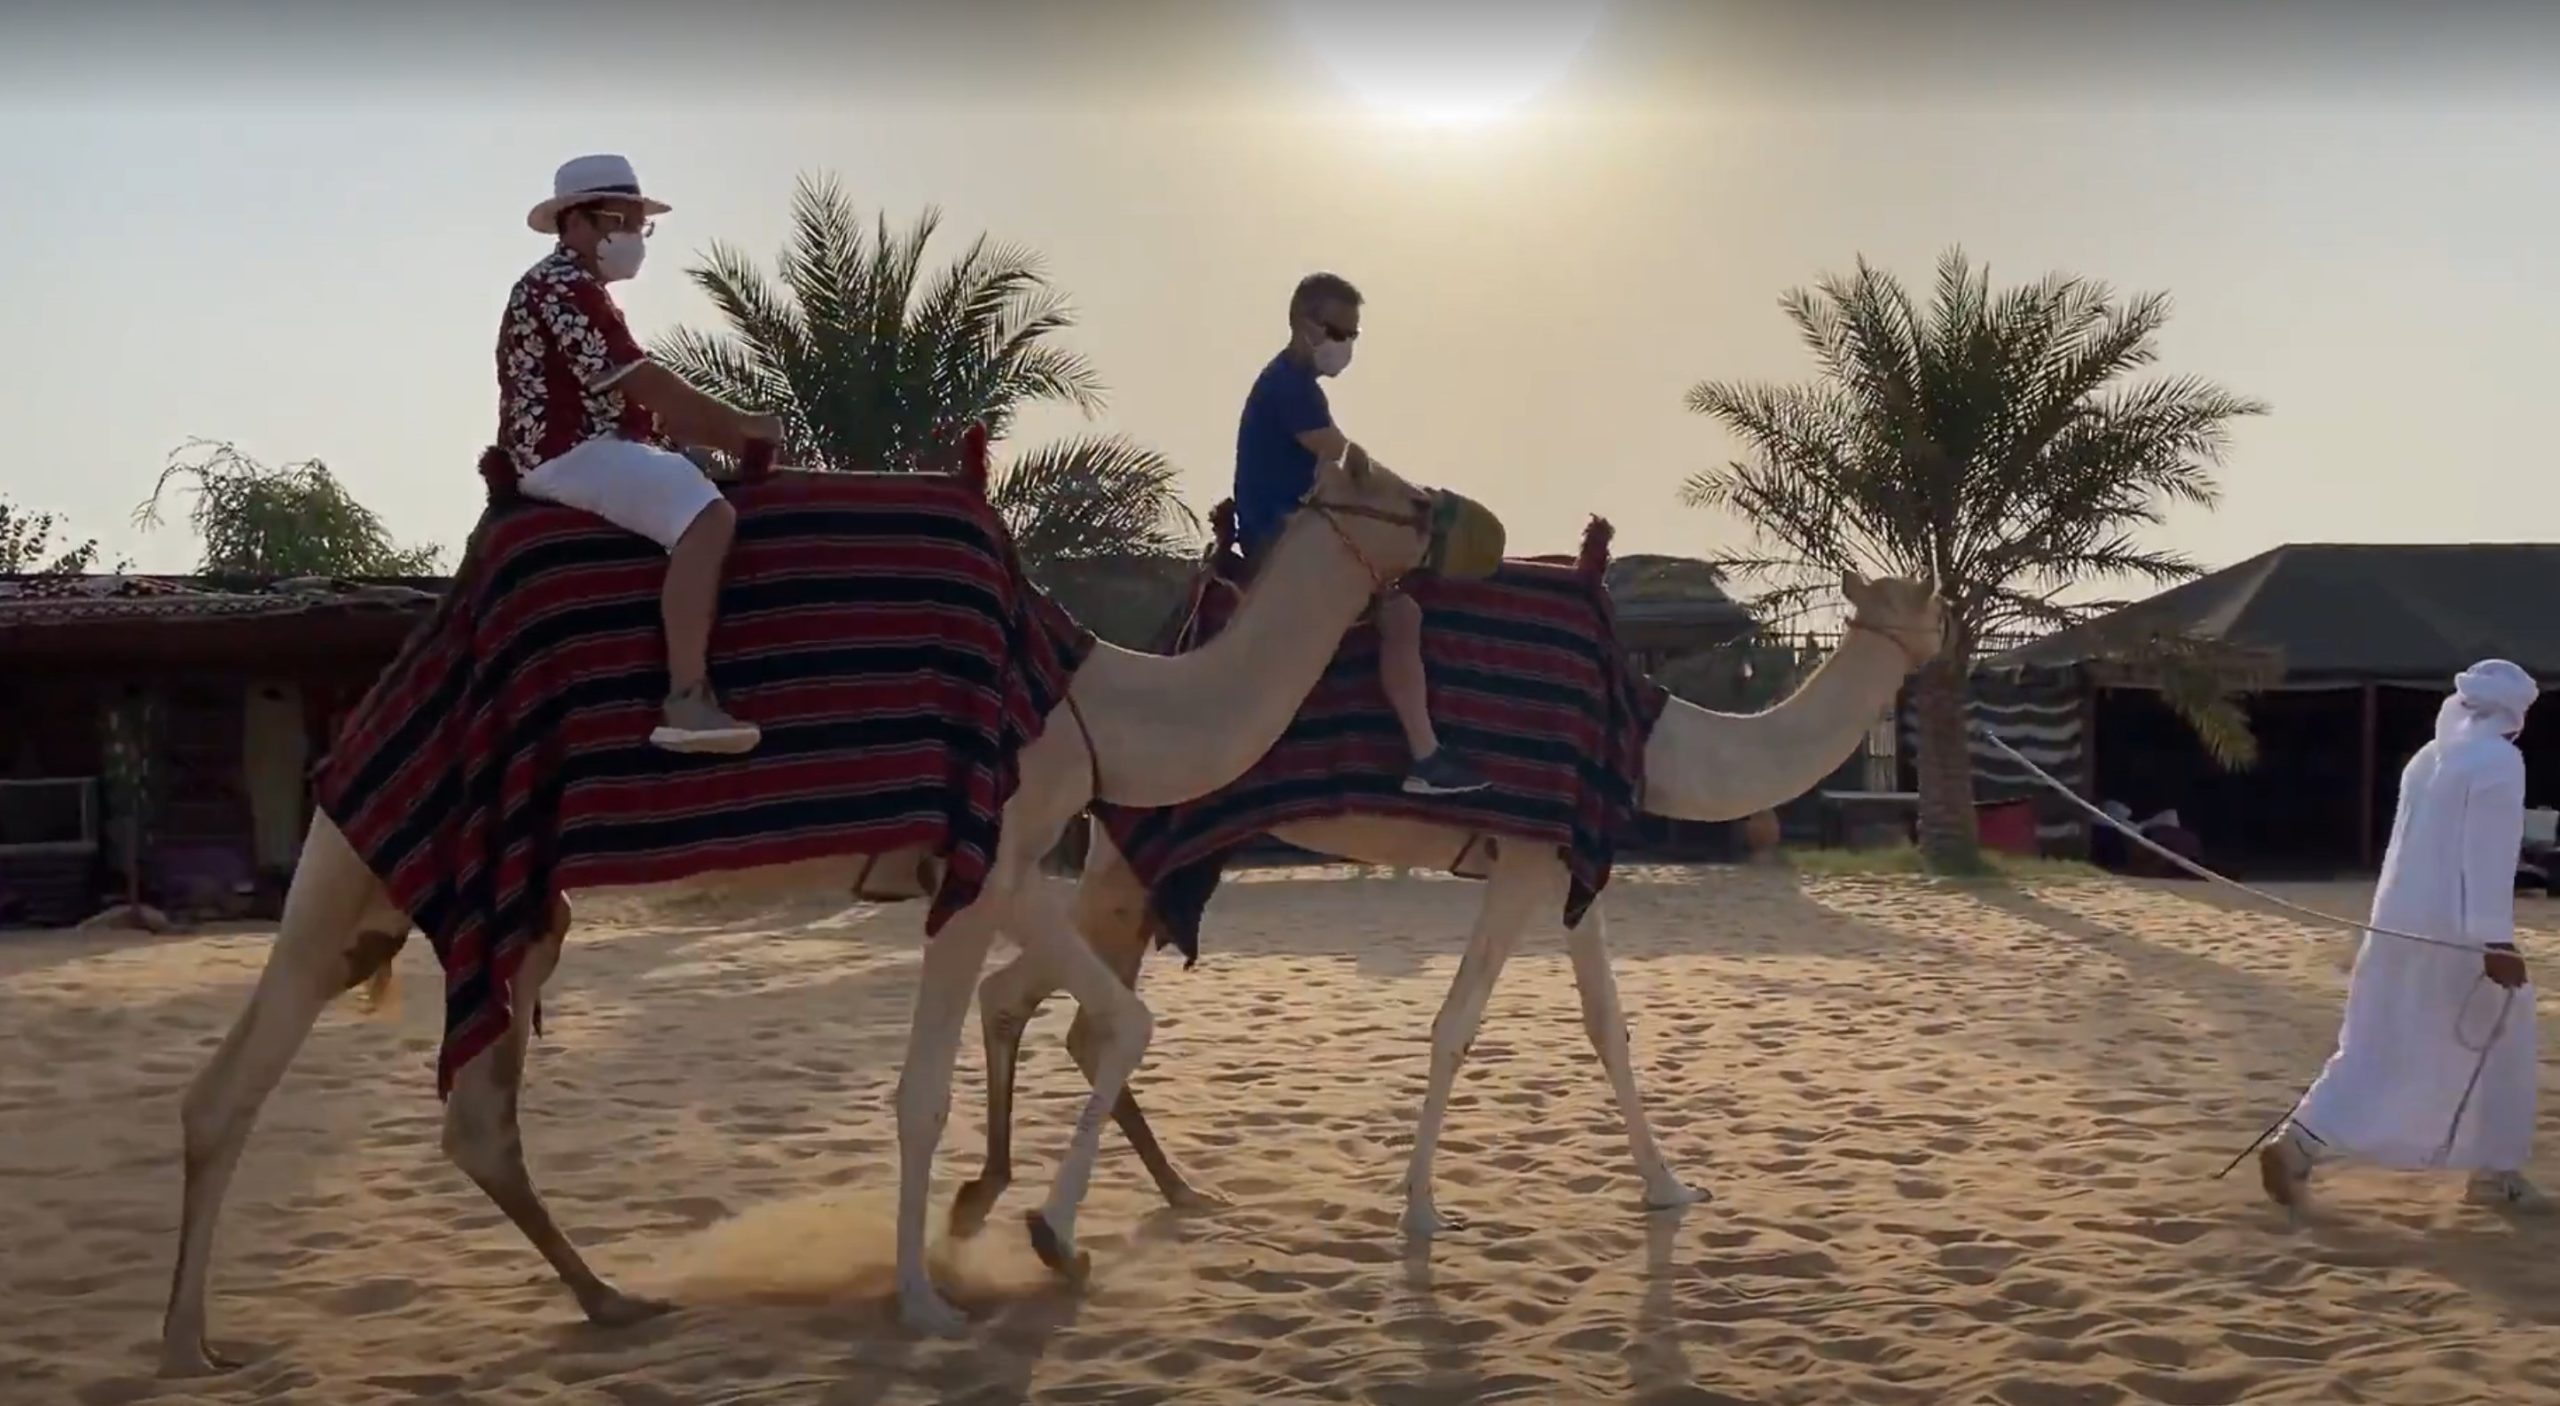 a man riding a camel on a beach